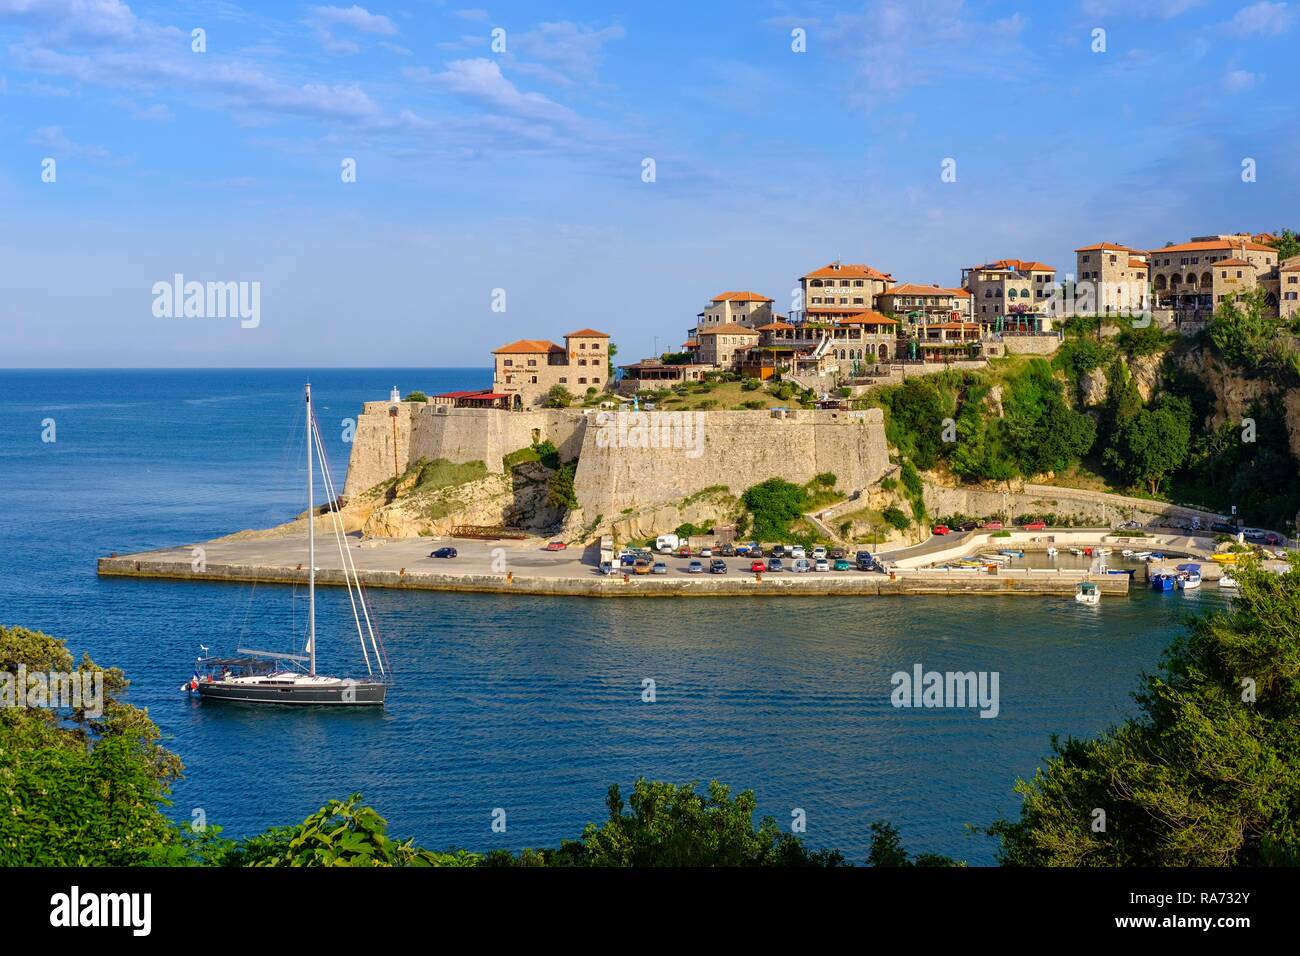 Old town, Ulcinj, Adriatic coast, Montenegro Stock Photo